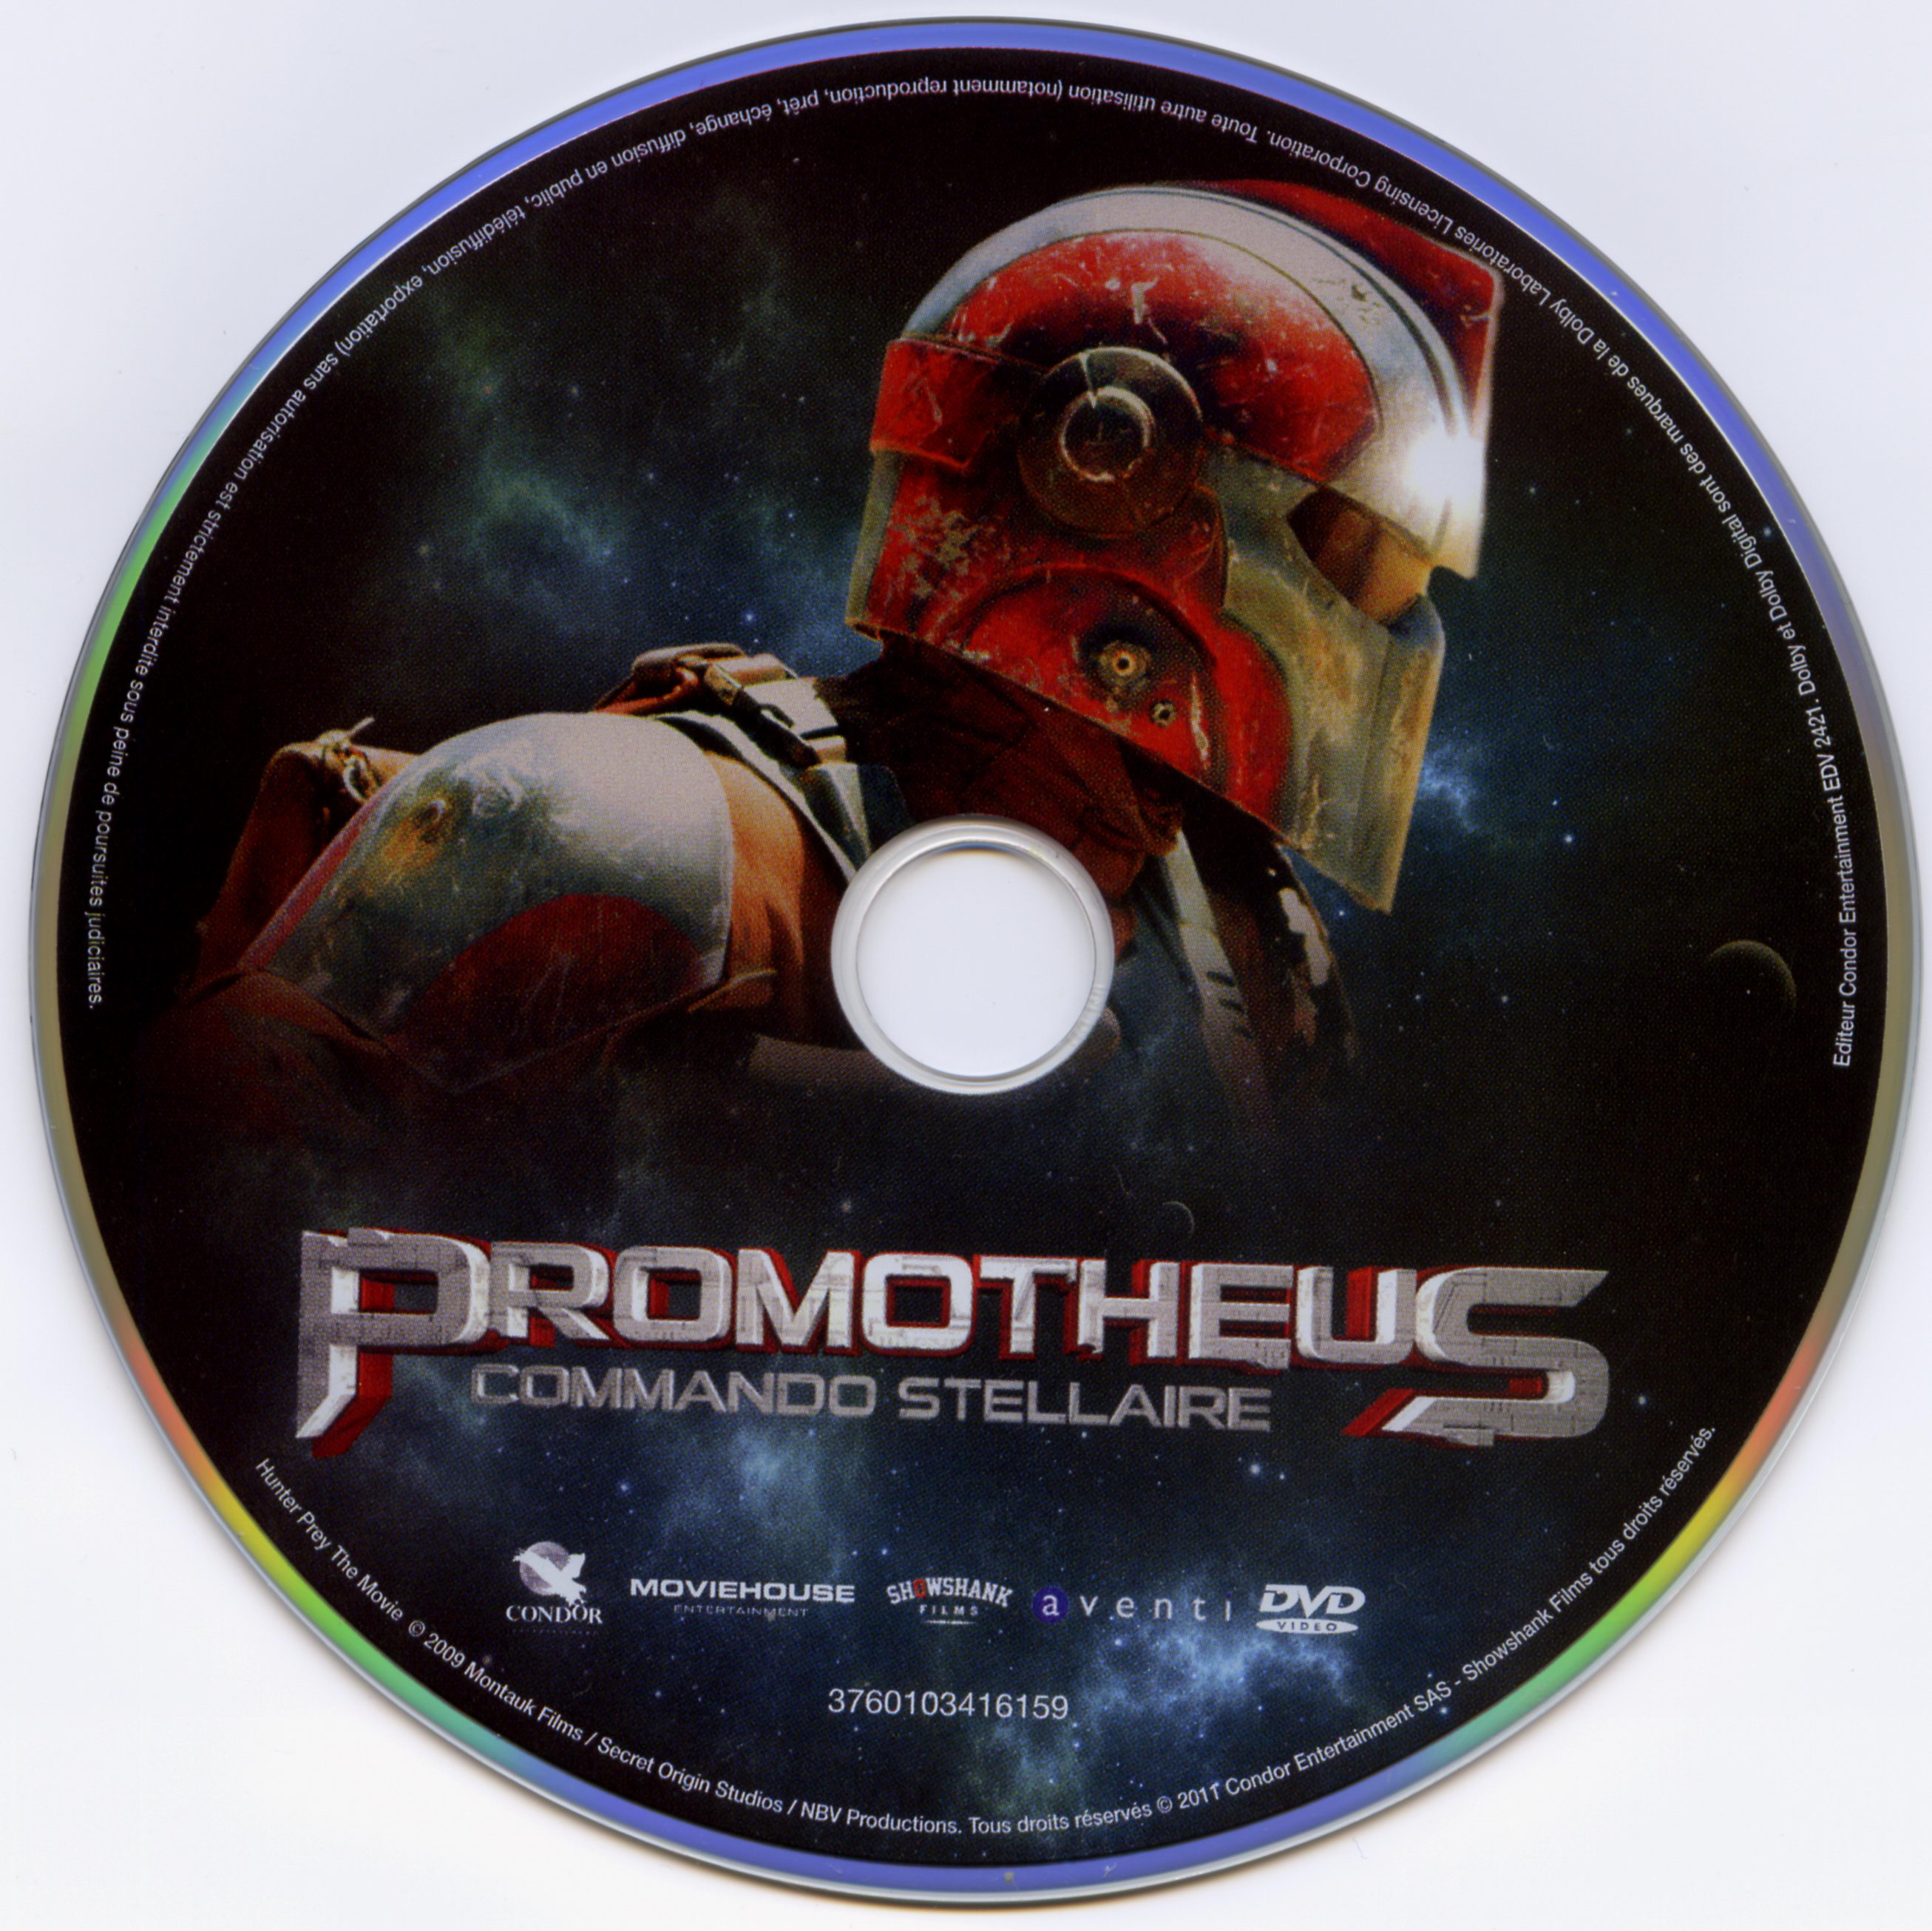 Promotheus - Commando stellaire